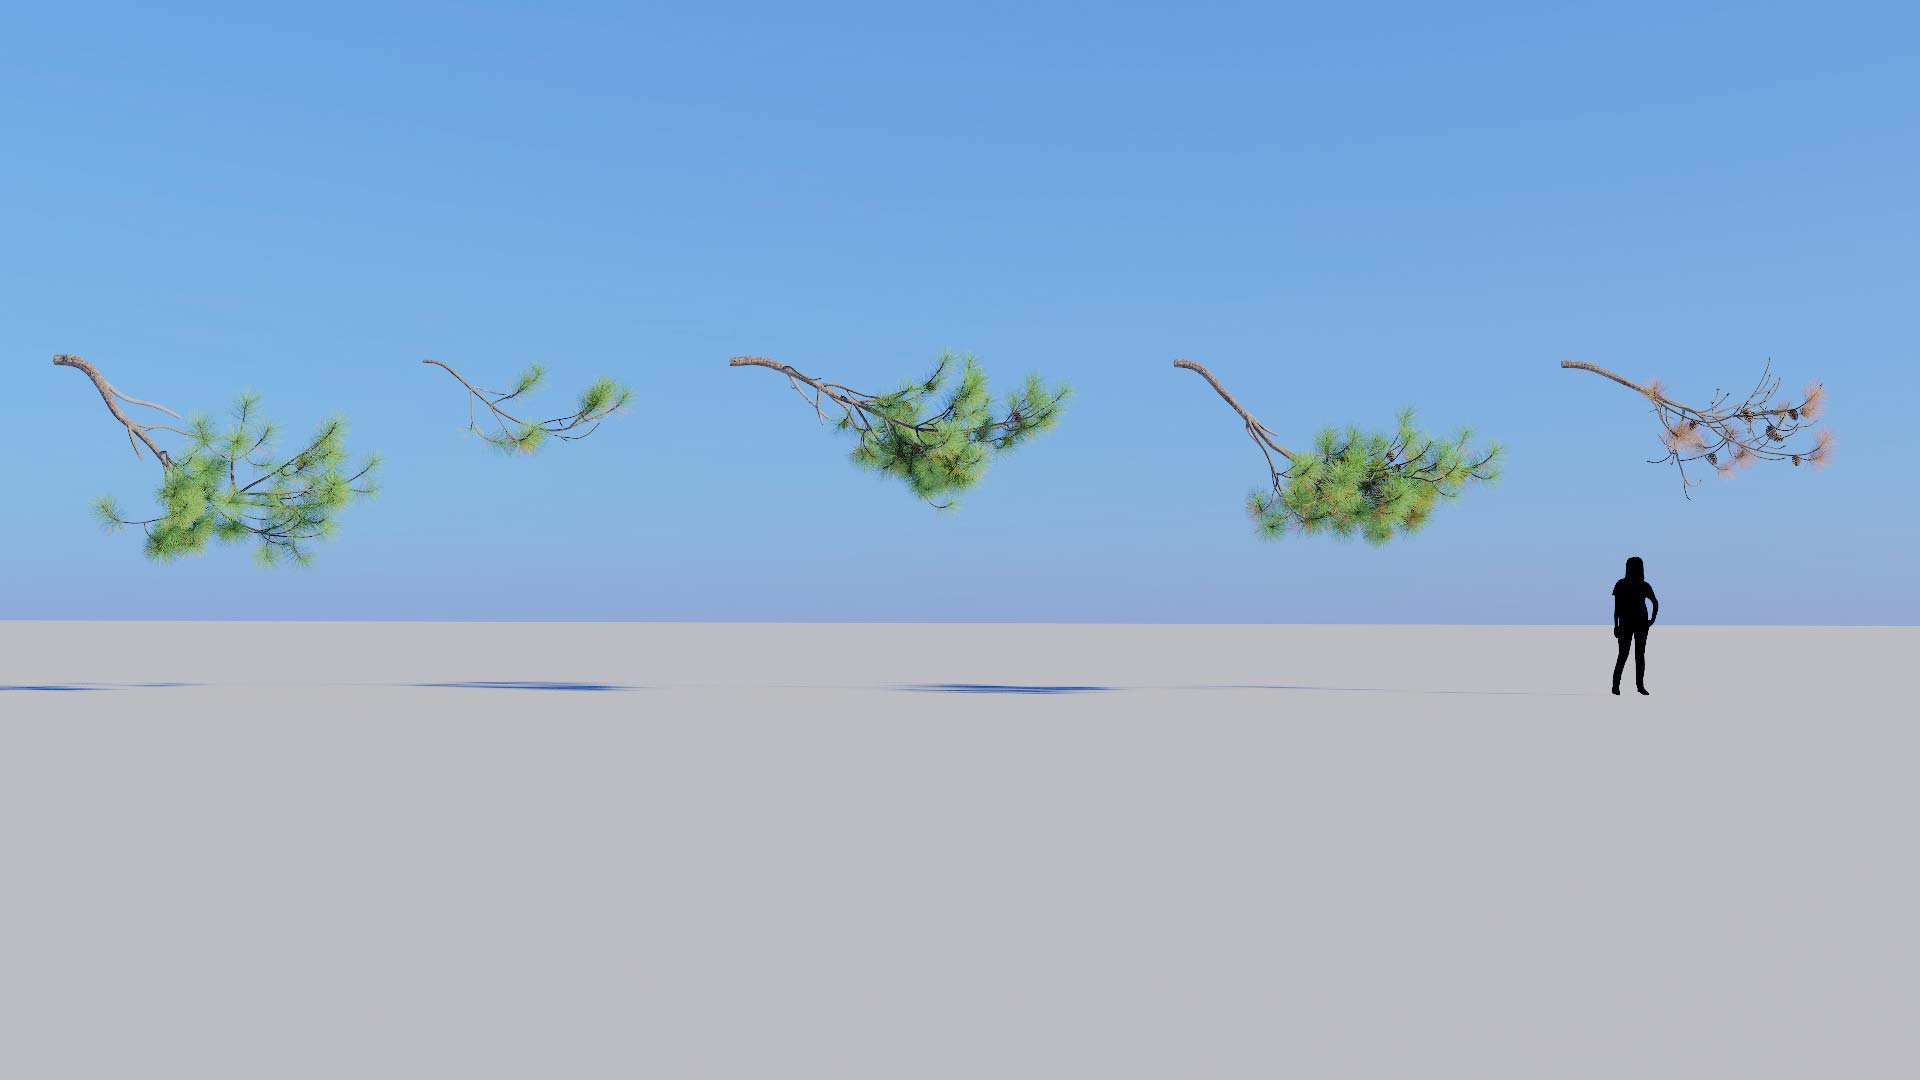 3D model of the Ponderosa pine branch Pinus ponderosa branch